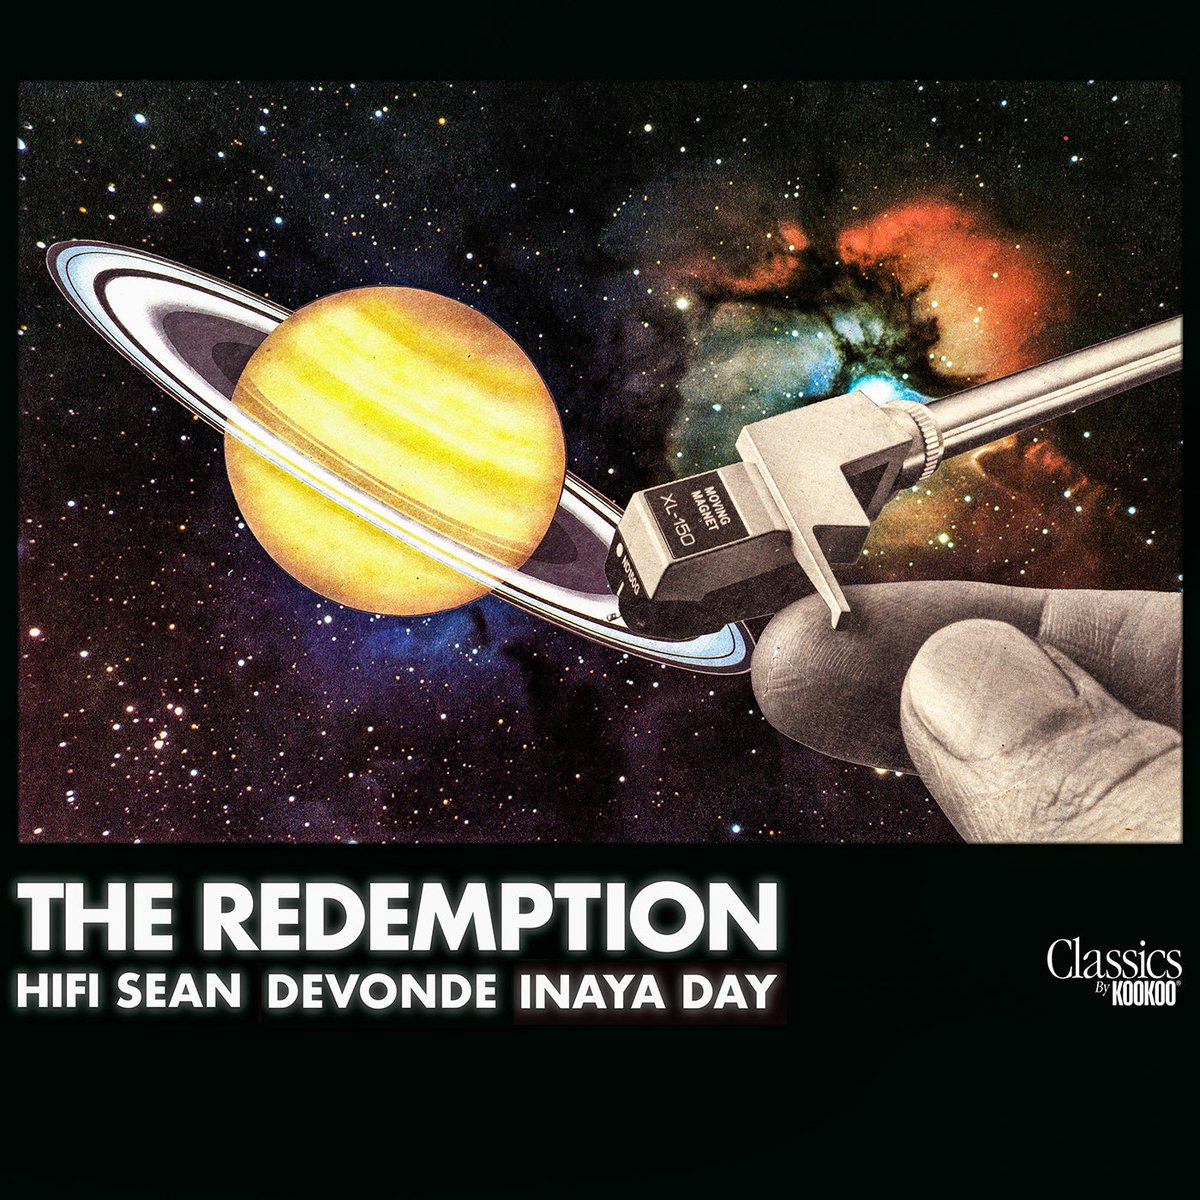 06. HiFi Sean, DeVonde, Inaya Day - The Redemption (Dub Version) [CLASSICS BY KOOKOO] #Pleasure Di.fm/nudisco